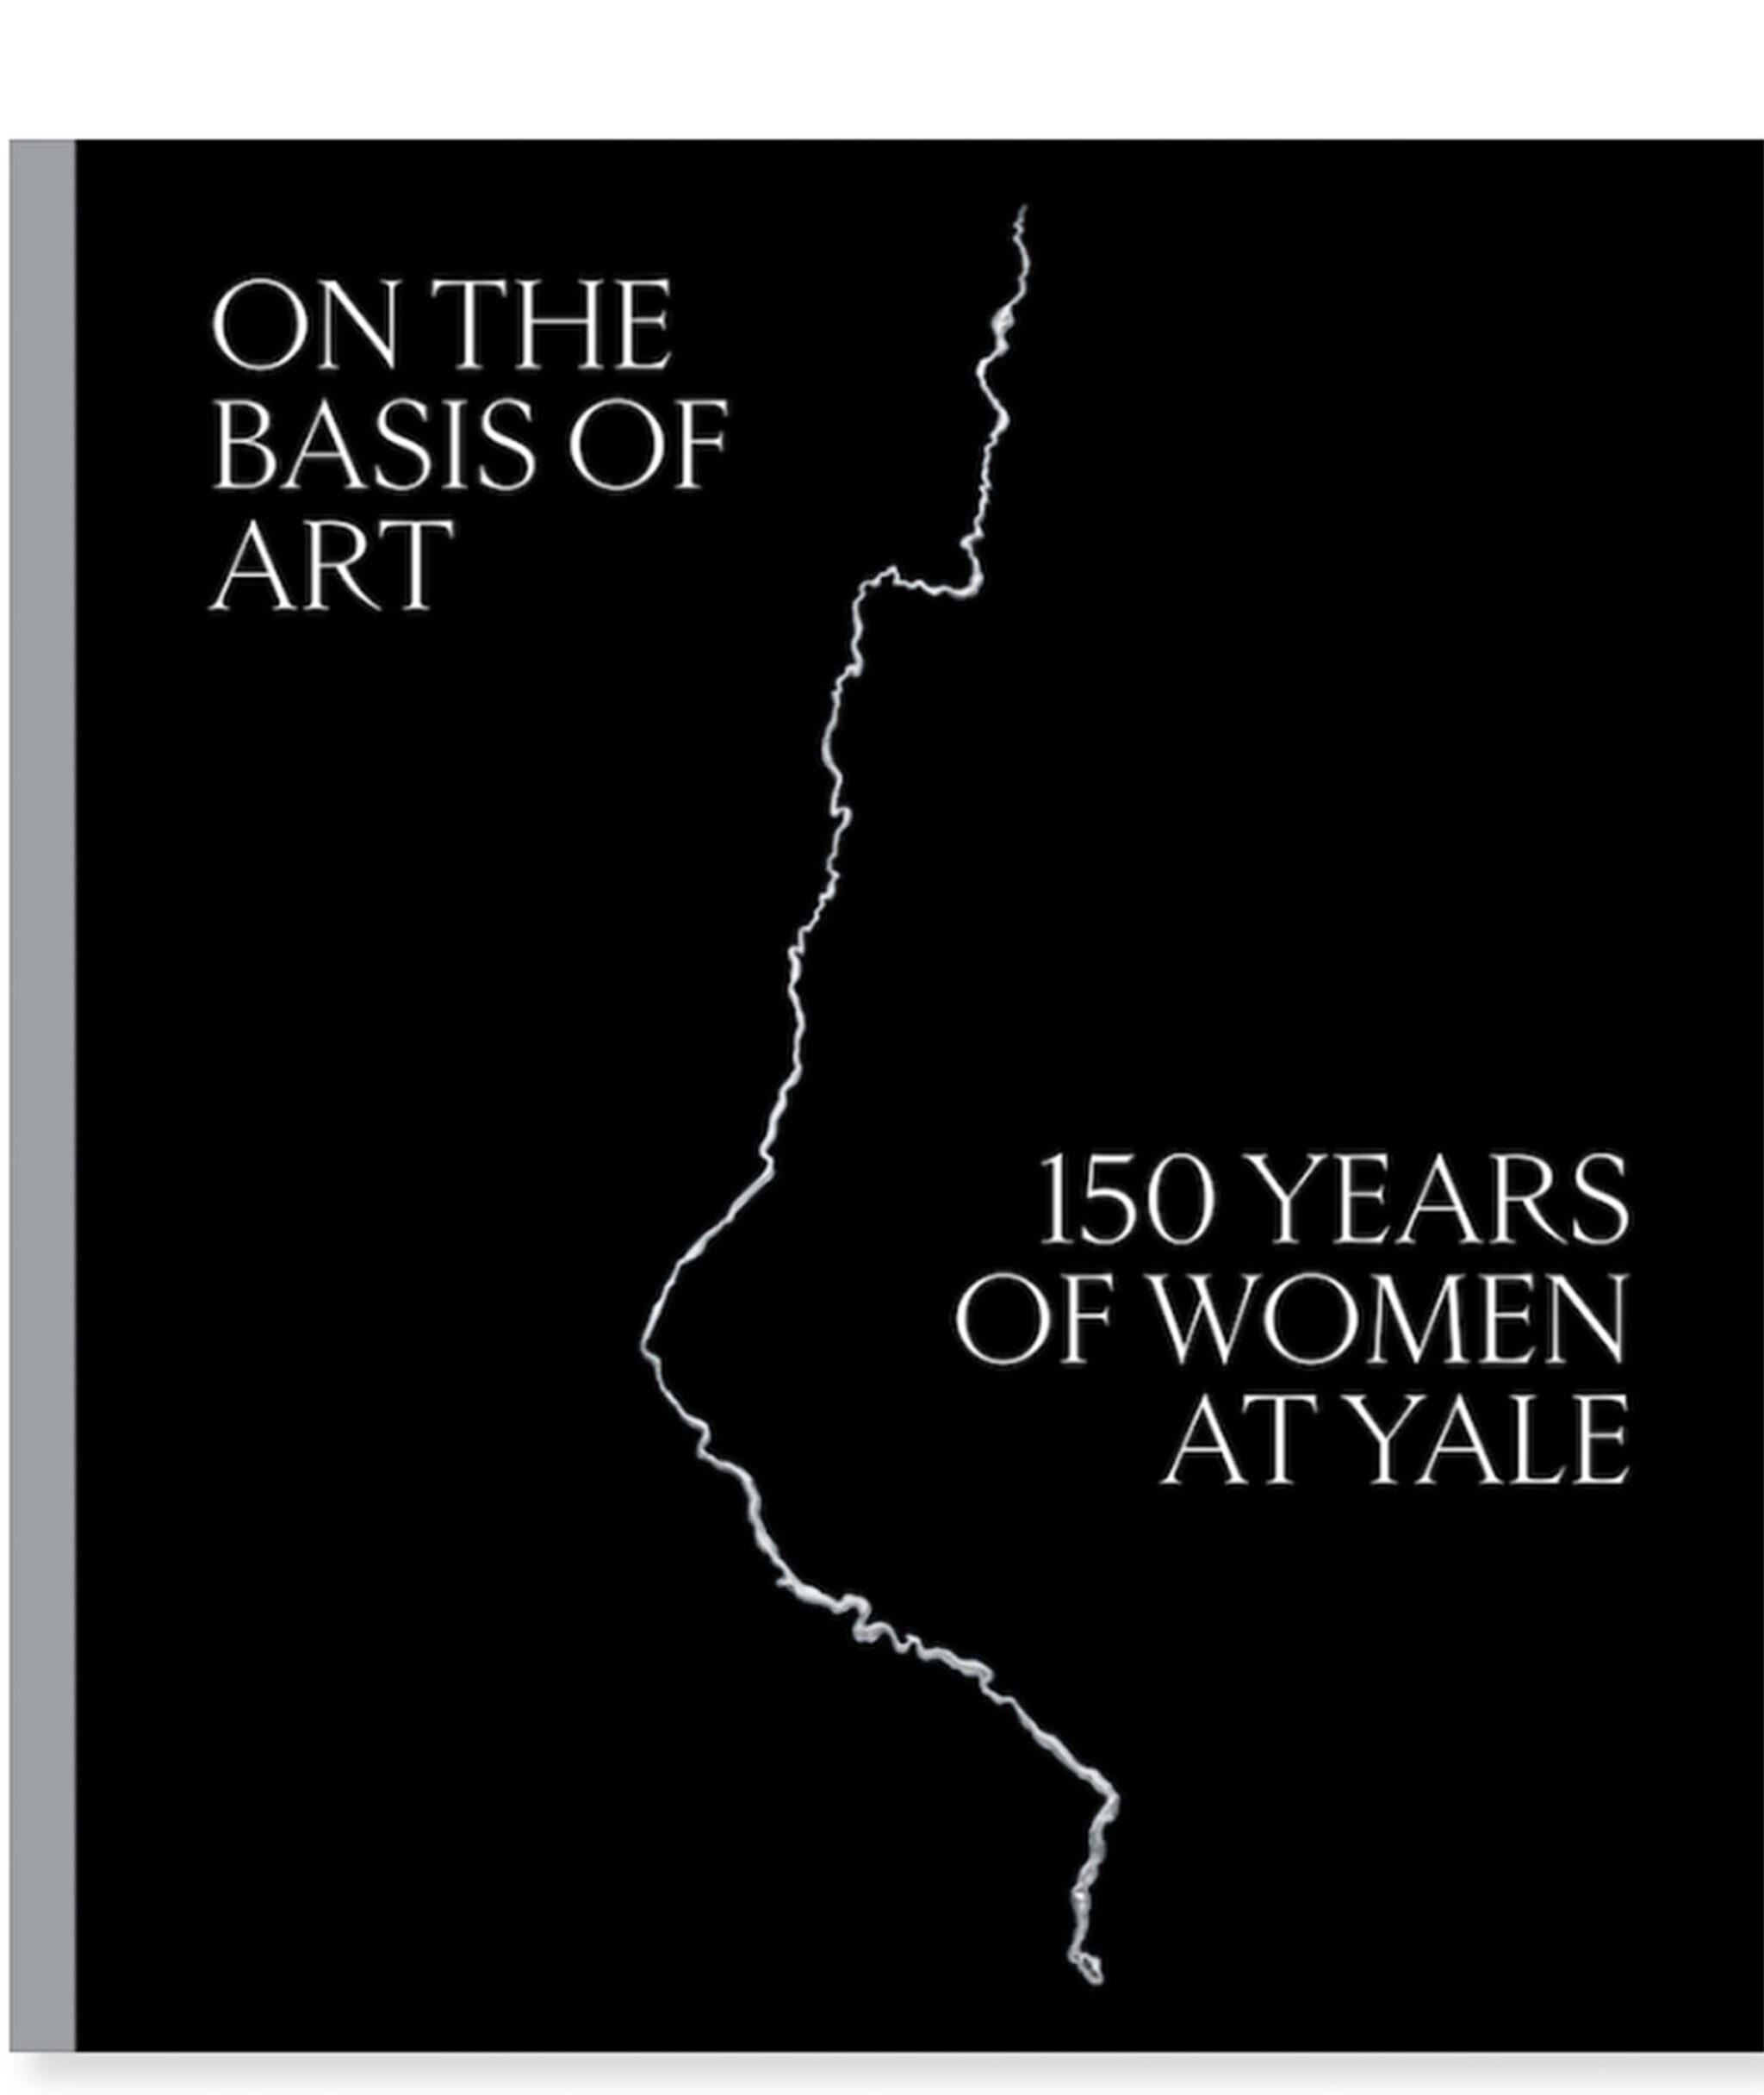 Hodermarsky, Elisabeth. On the Basis of Art: 150 Years of Women at Yale, New Haven: Yale University Press